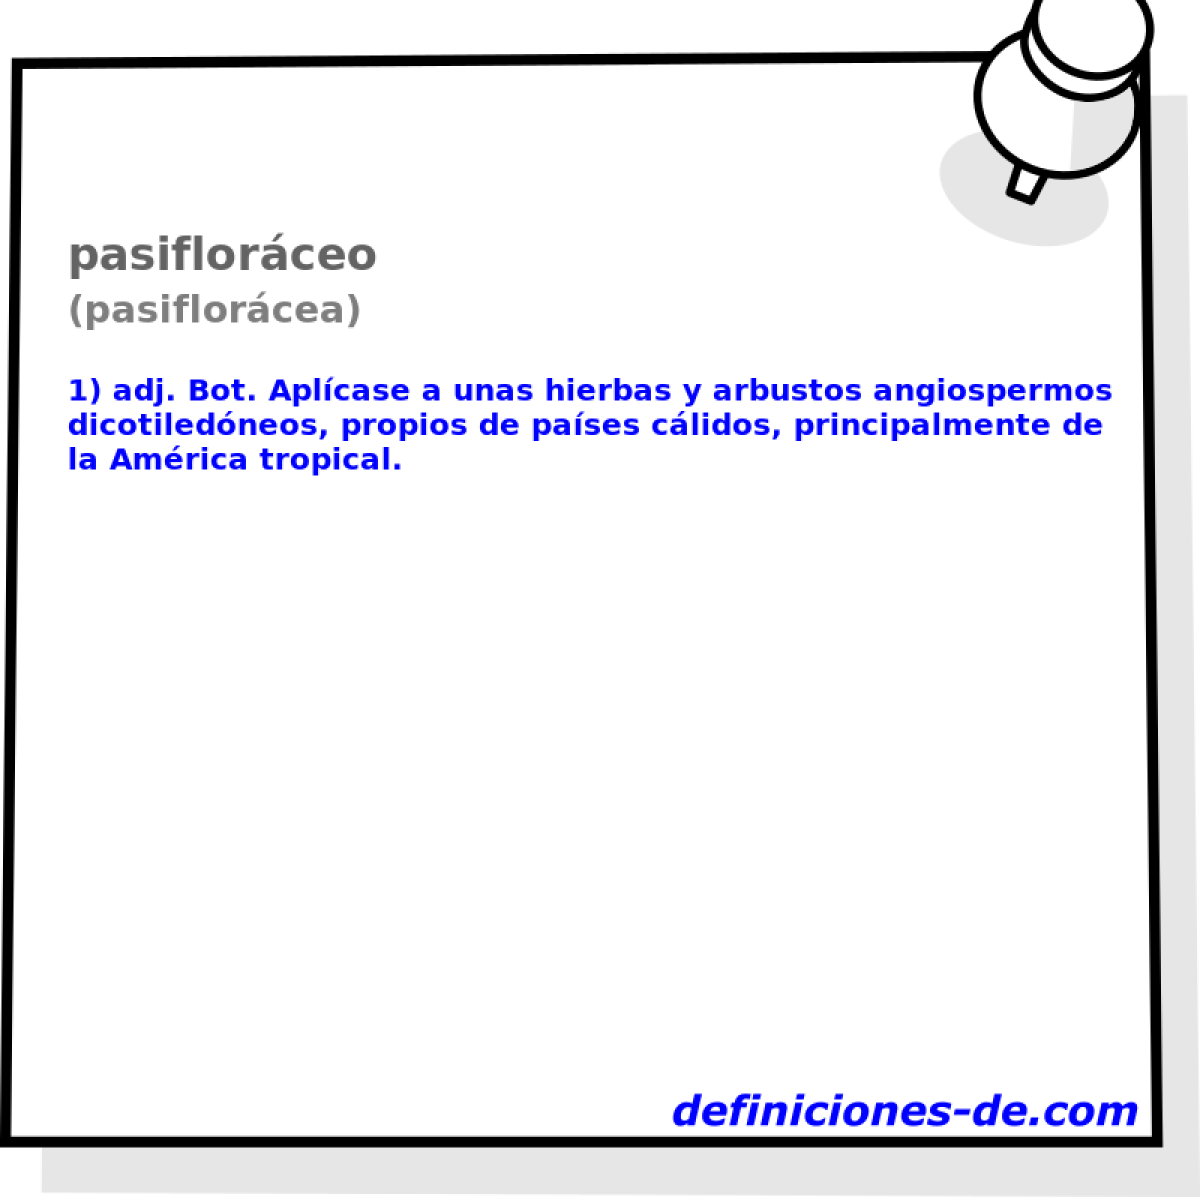 pasiflorceo (pasiflorcea)